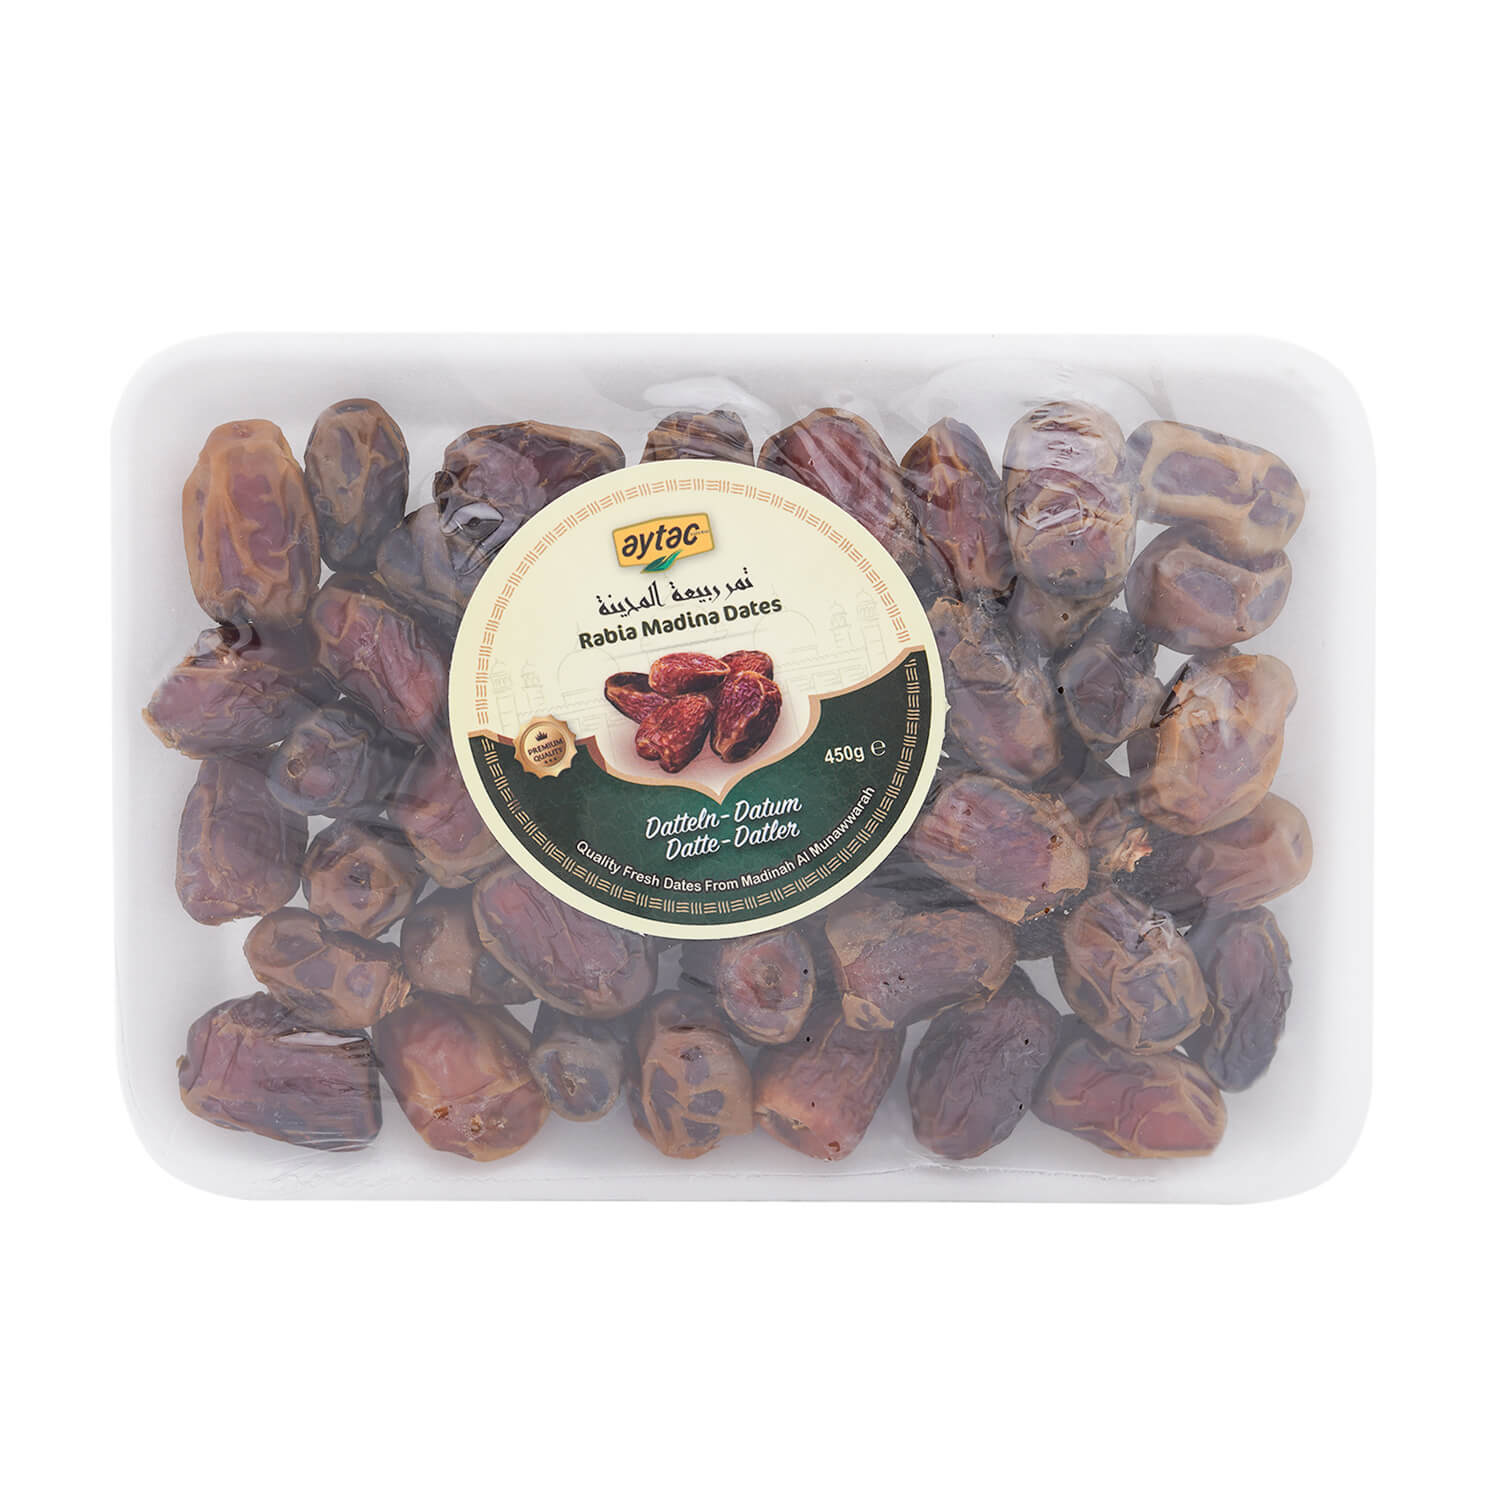 Aytac Madina Rabia Dates (450G) - Aytac Foods